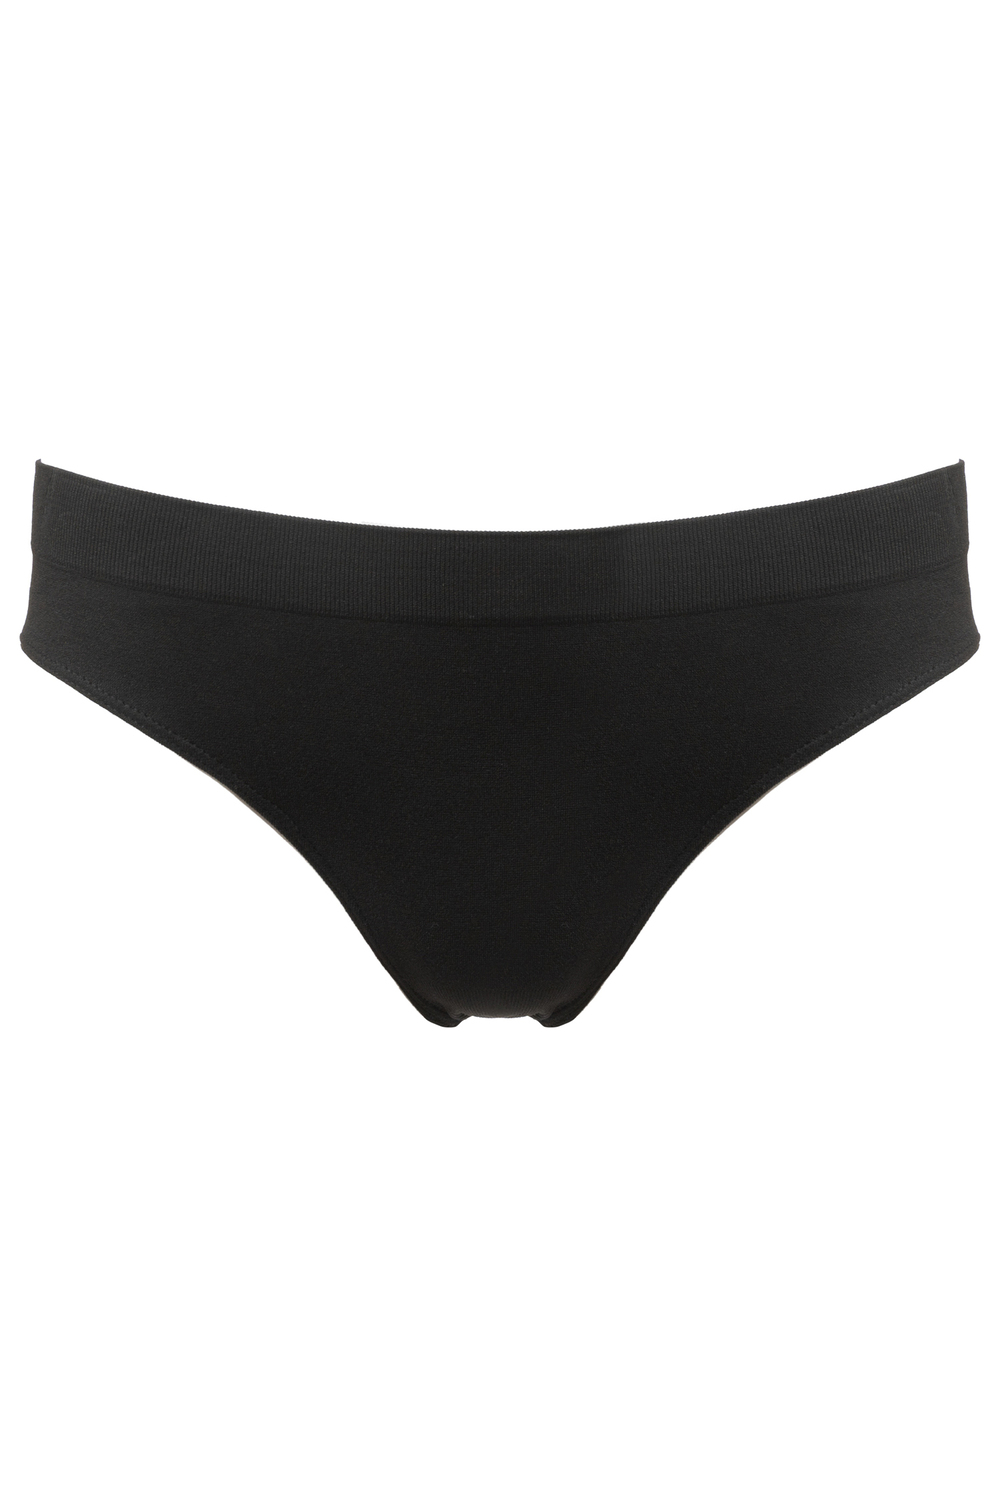 Set of 3 seamless high-cut panties - Charcoal, pink & black. Size: m